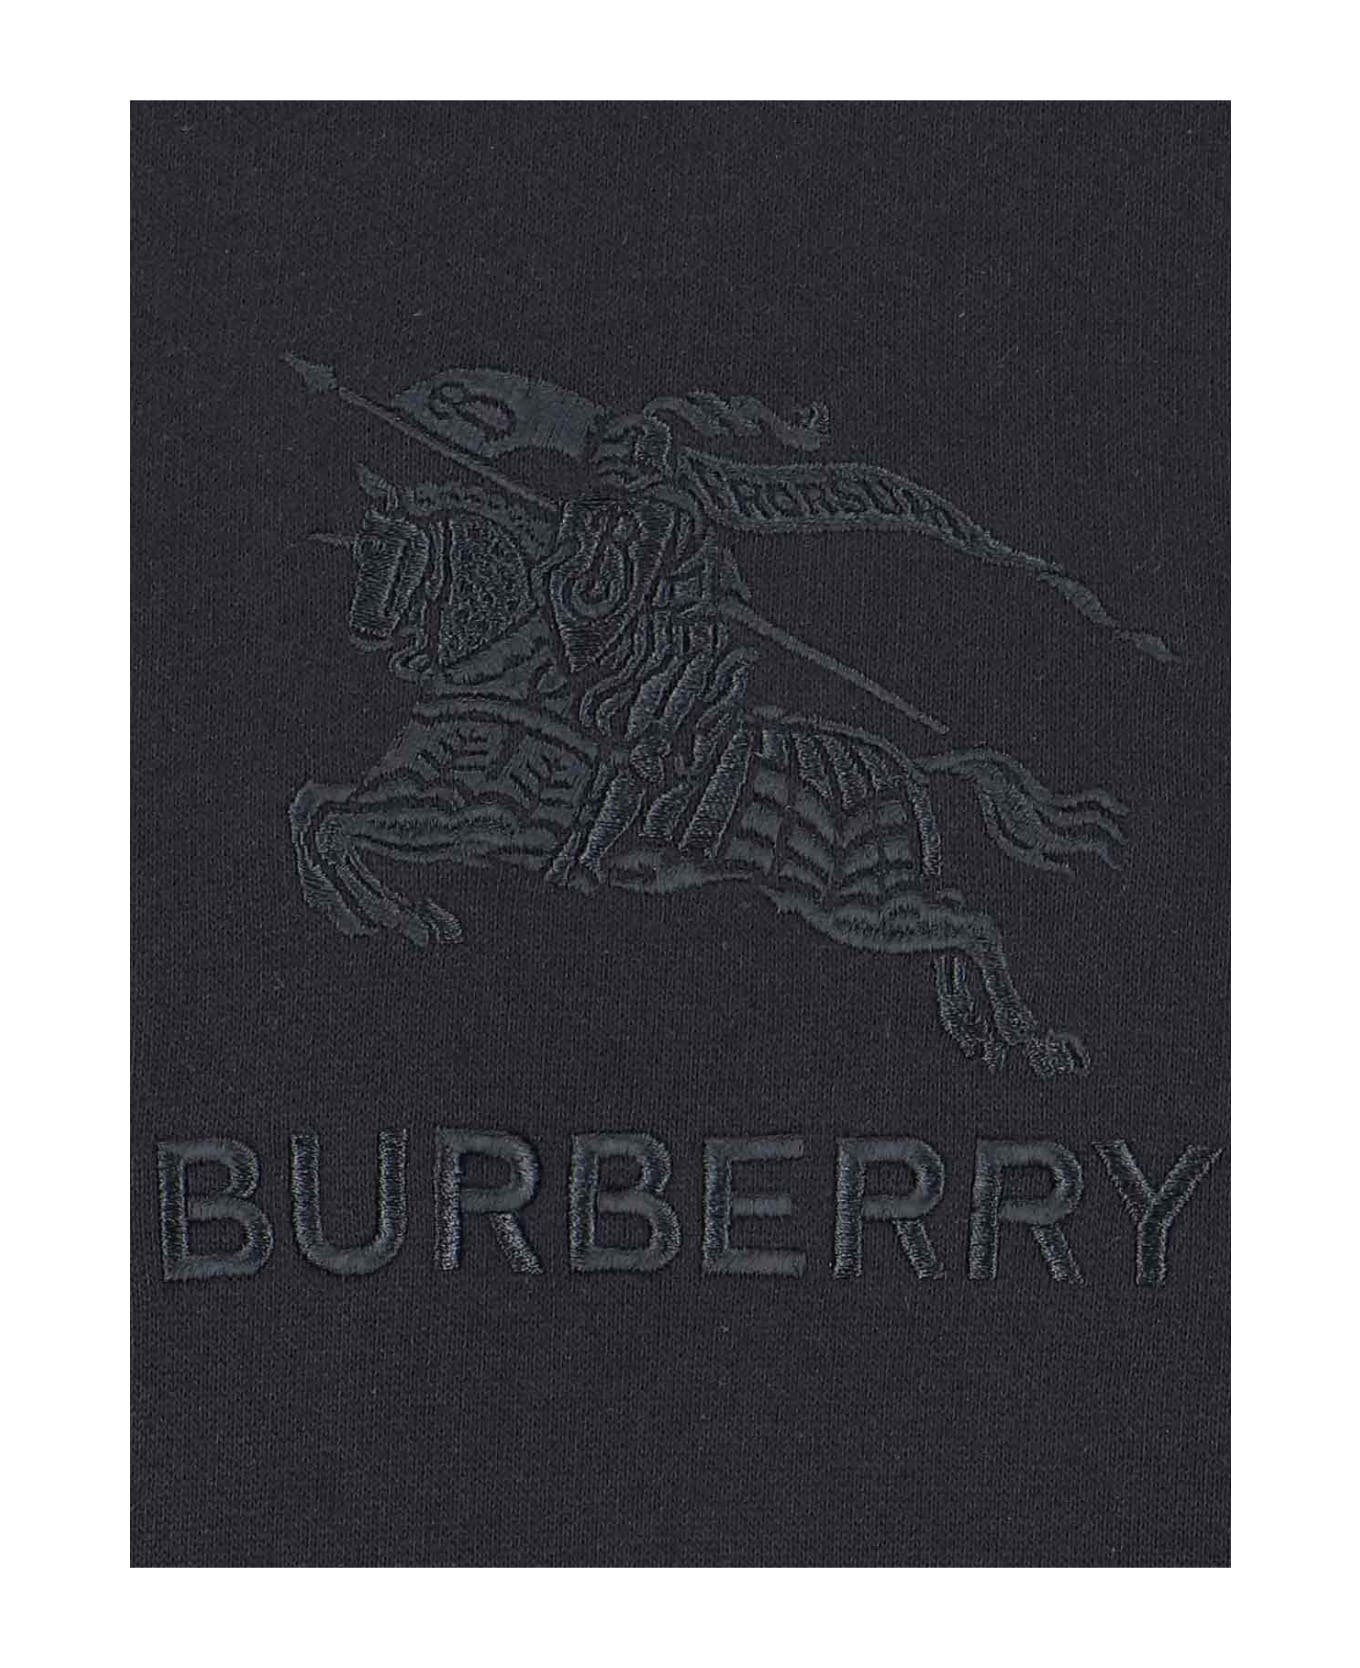 Burberry Ekd Black Crew-neck Sweatshirt - Black